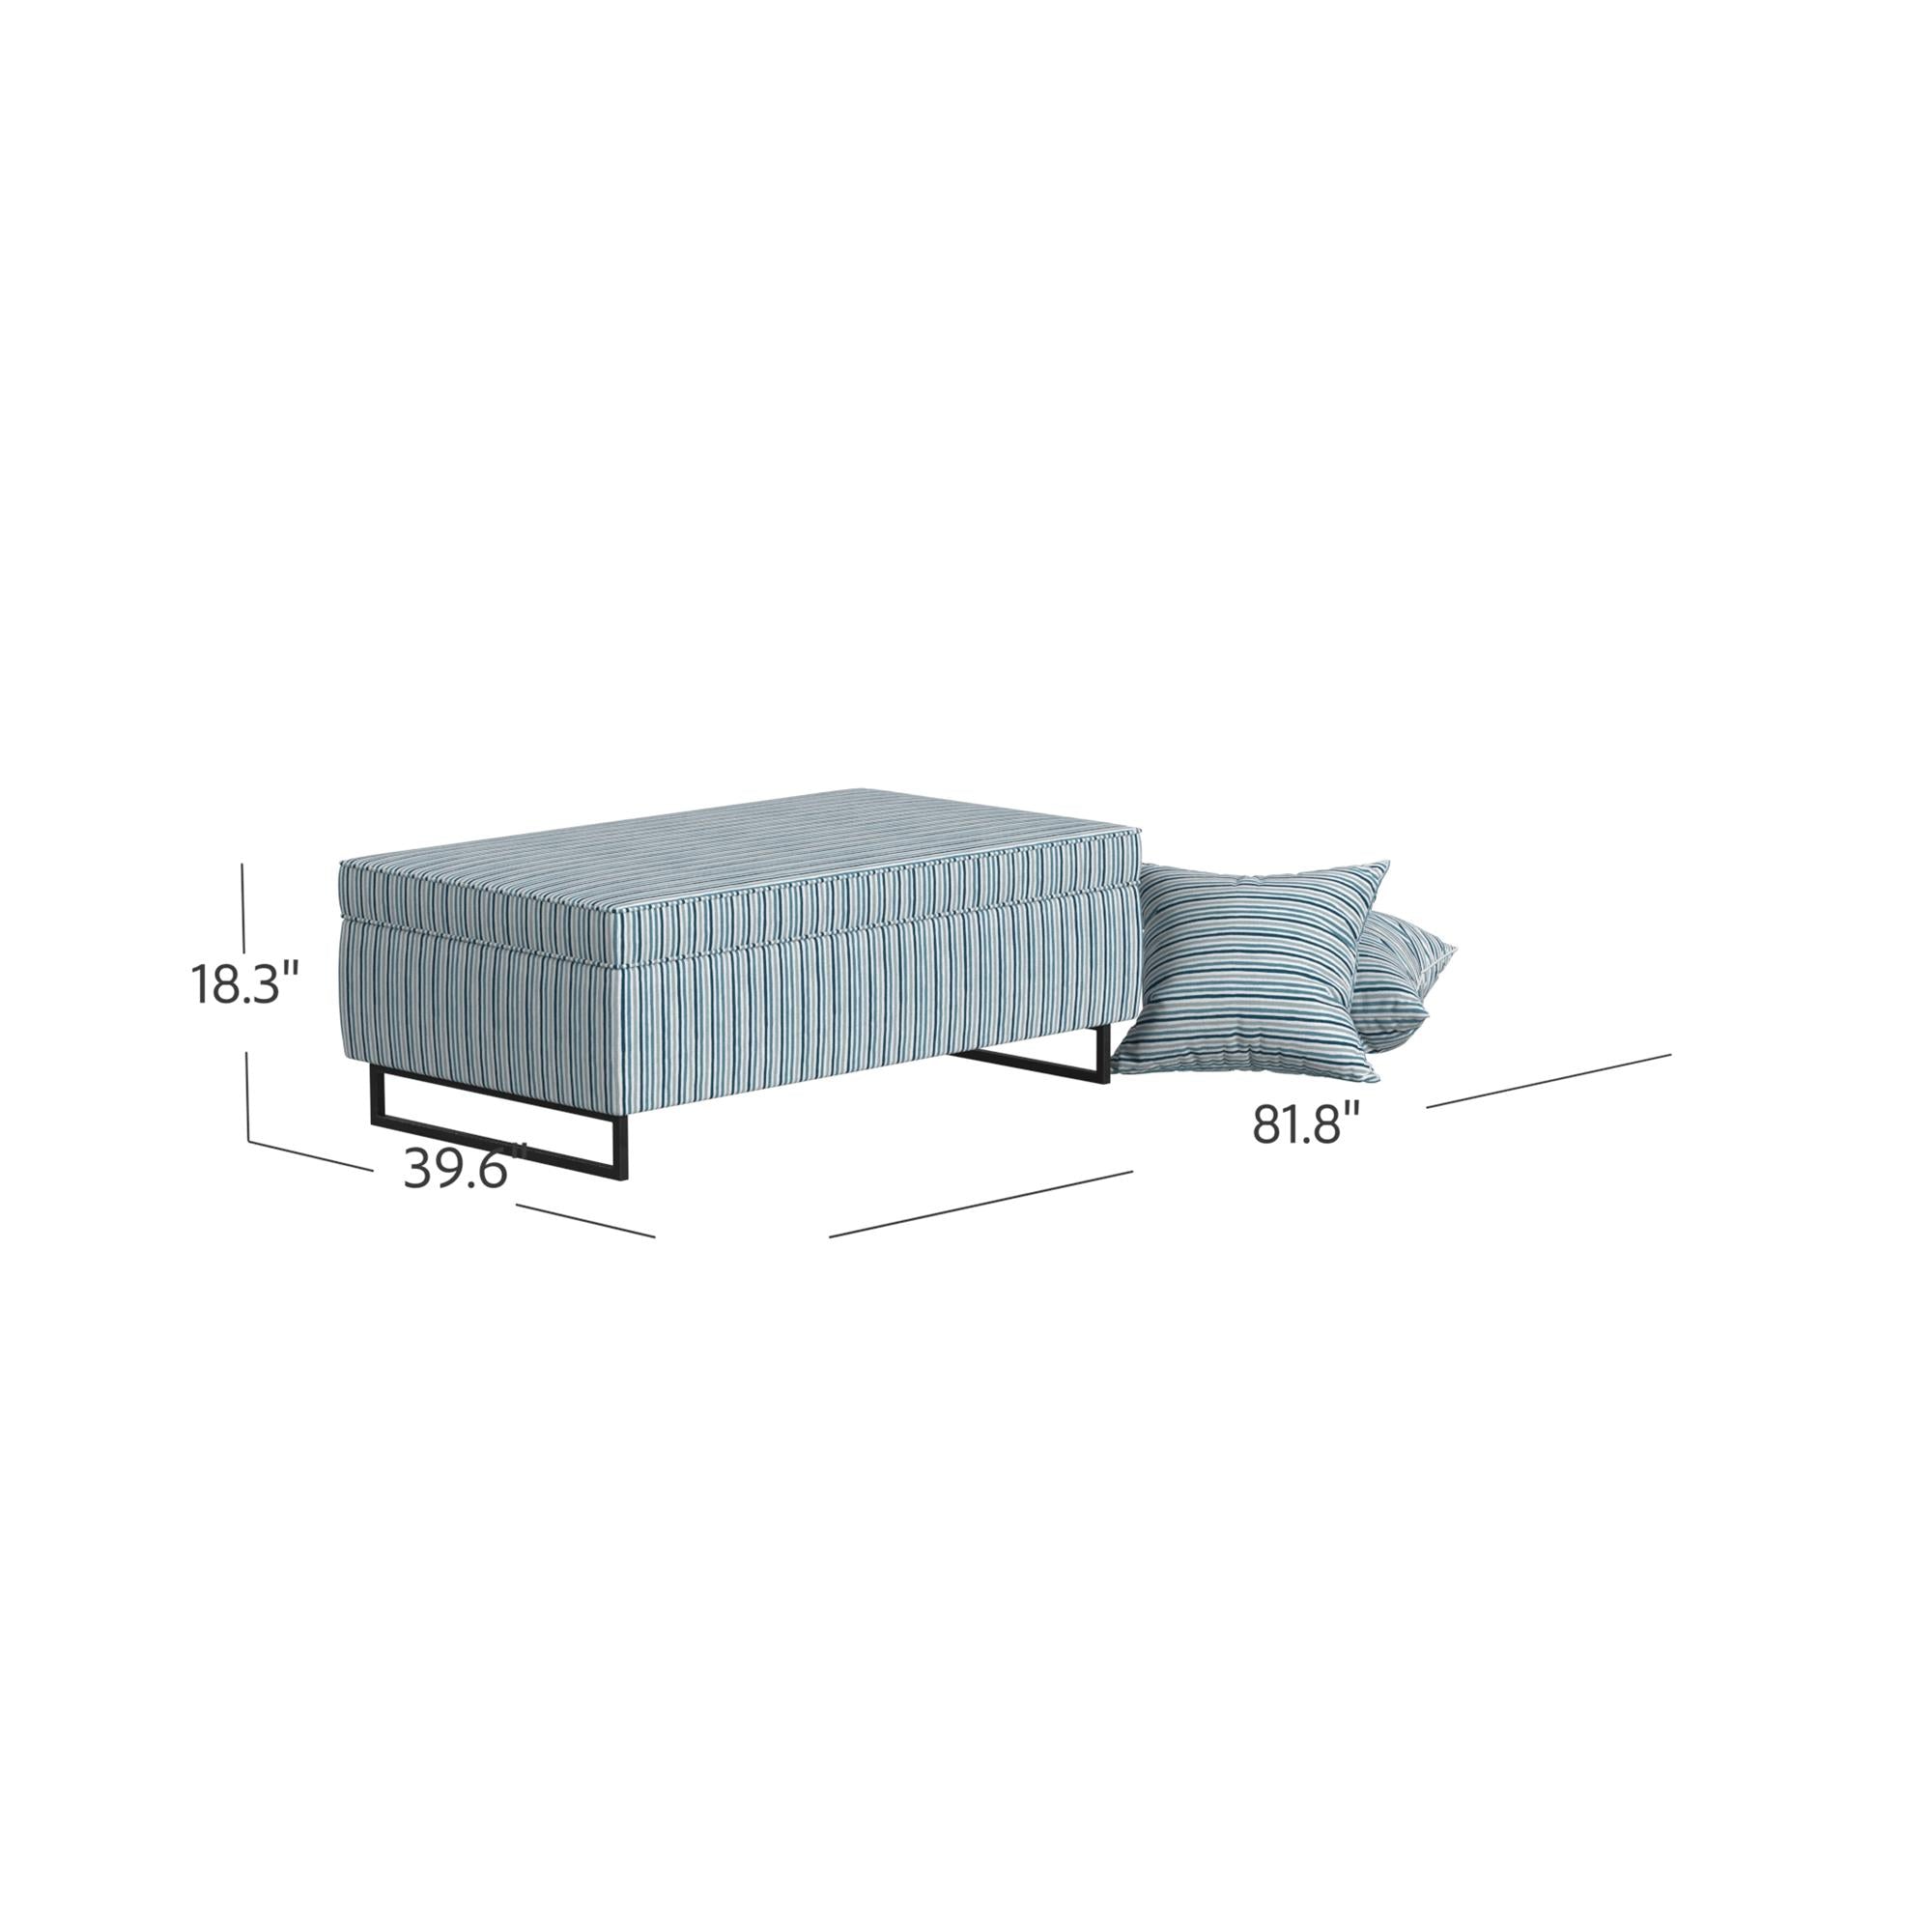  Bleeker Rectangular Storage Ottoman and 2 Pillows Set - Multi Blue Painted Stripe - N/A